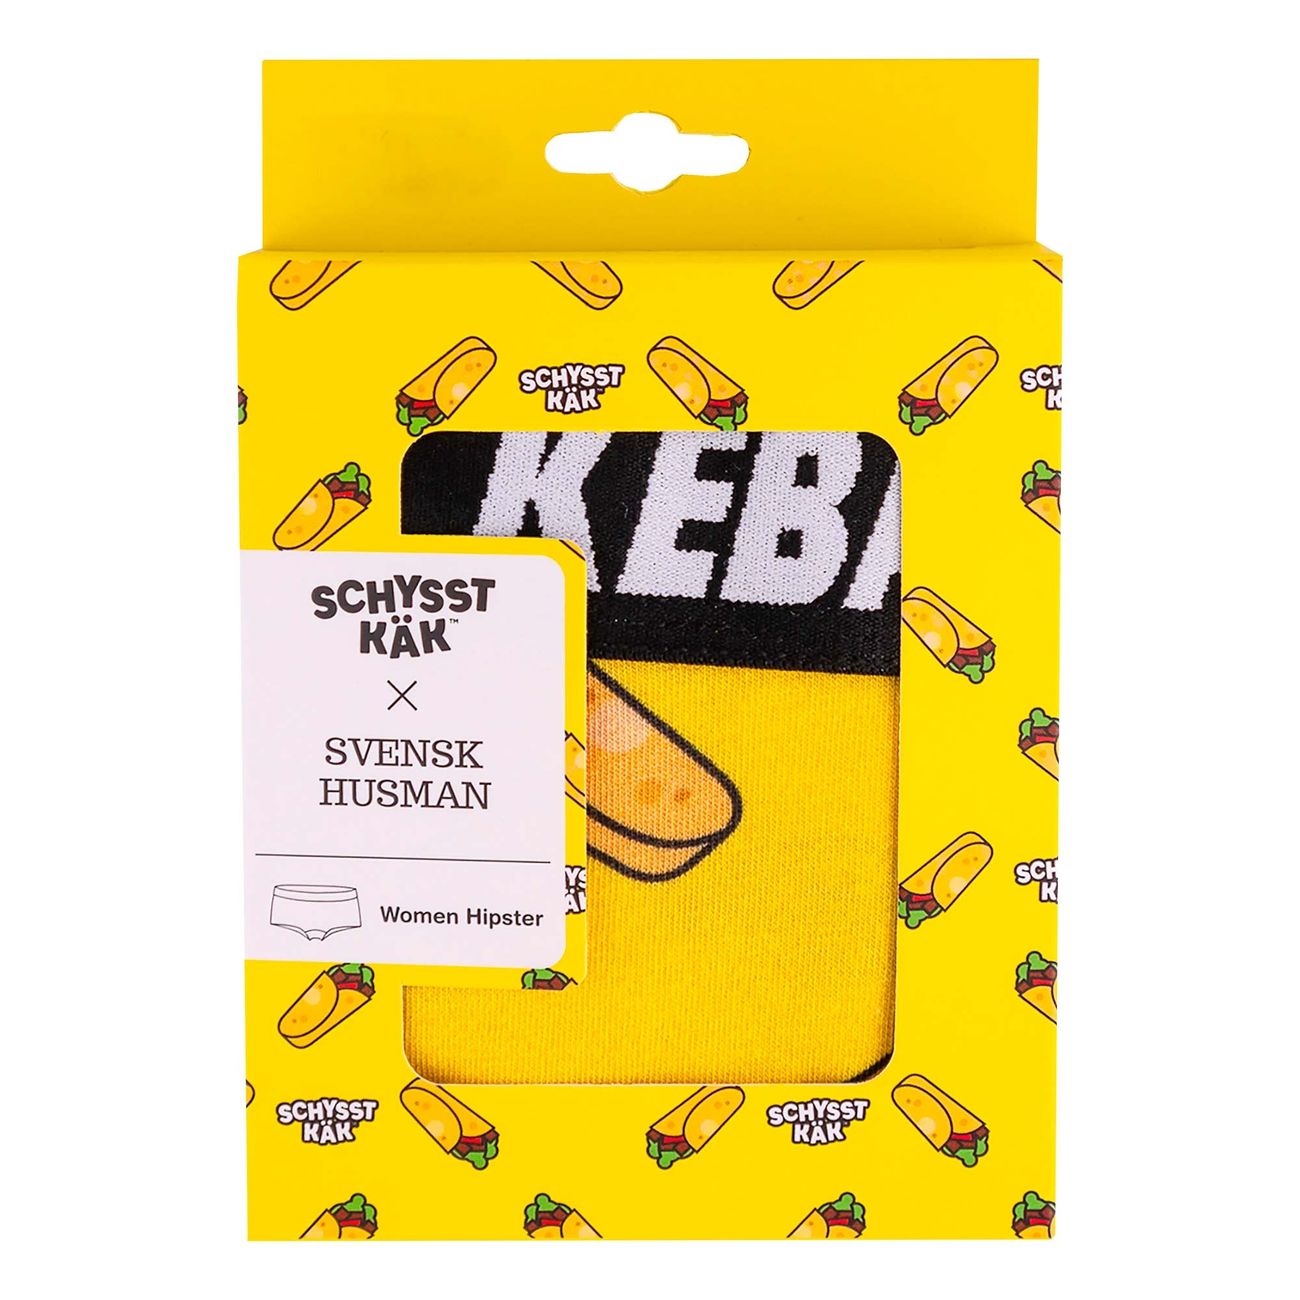 trosor-schysst-kak-kebab-93838-2